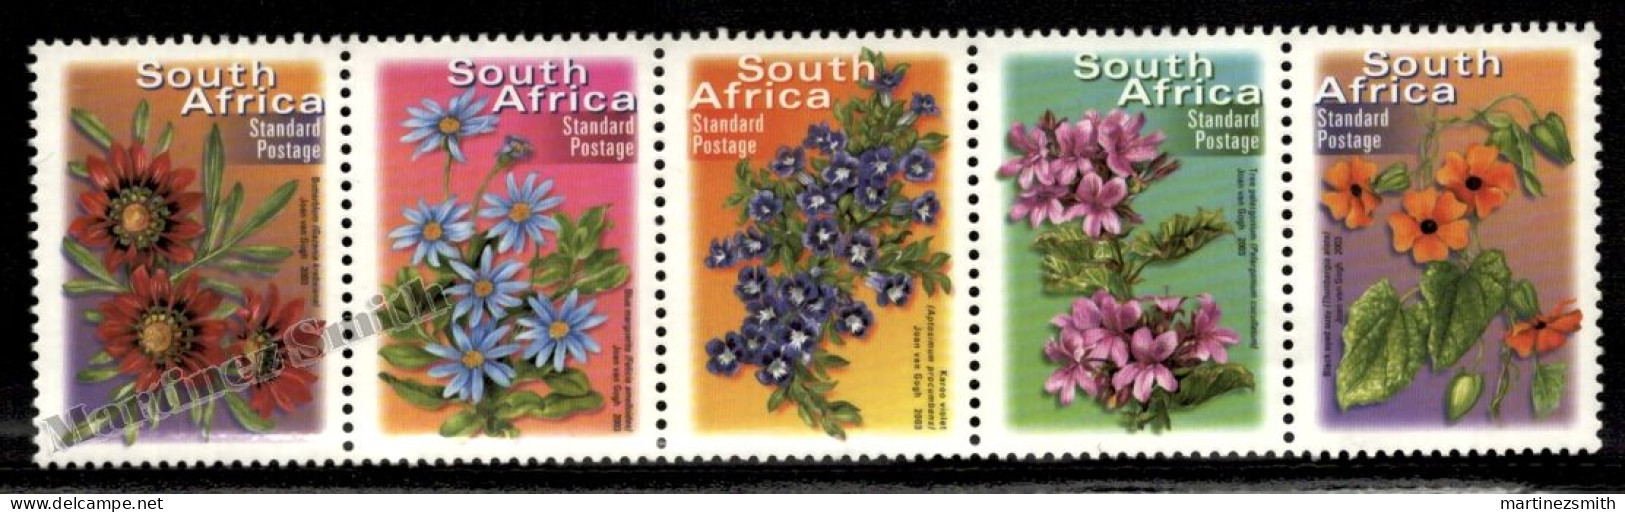 South Africa - Afrique Du Sud - Africa Sur 2001 Yvert  1159 - 63 -Definitive, Flowers - 2007 Reprint - MNH - Unused Stamps